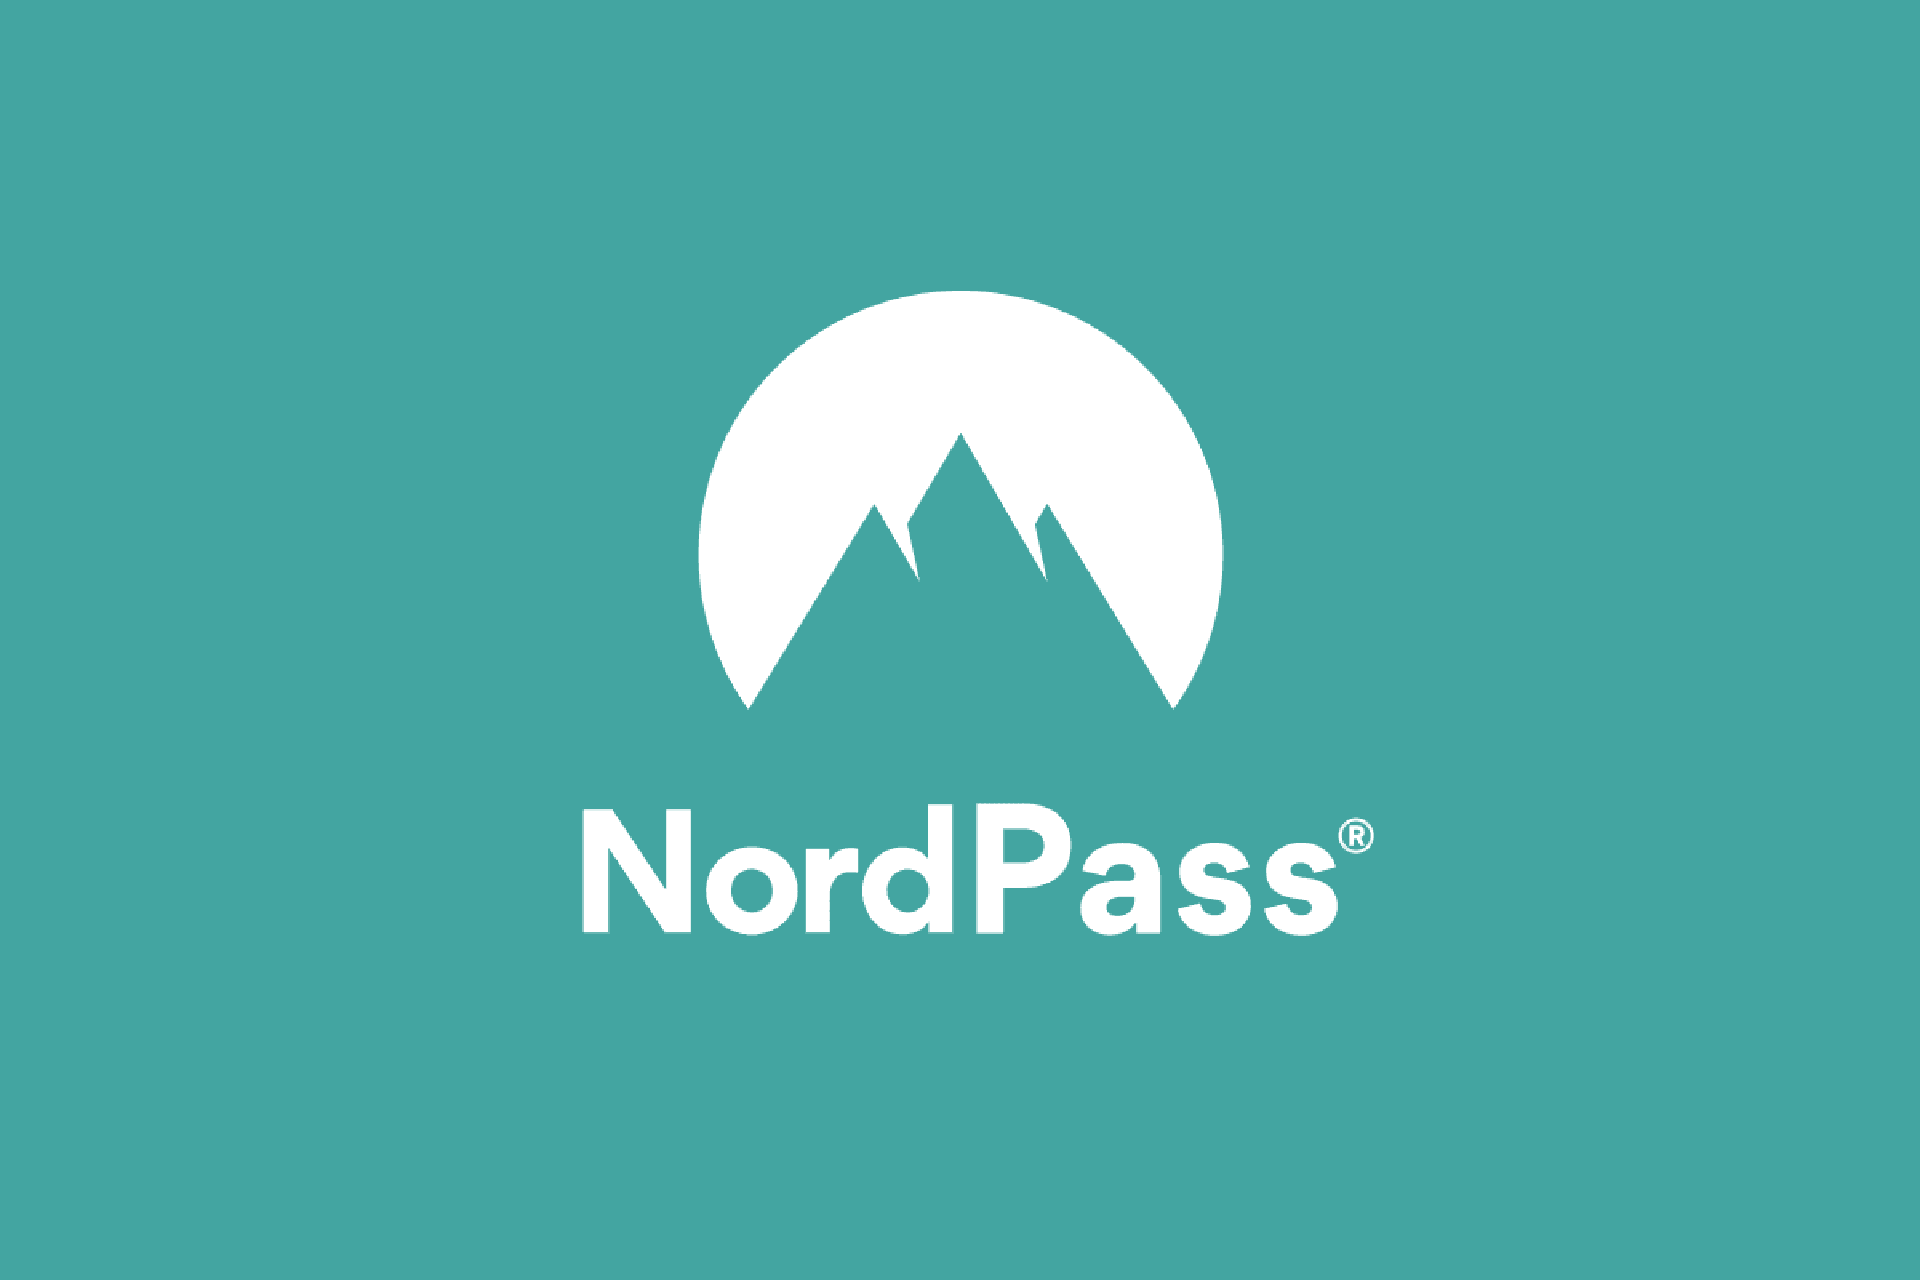 NordPass press release